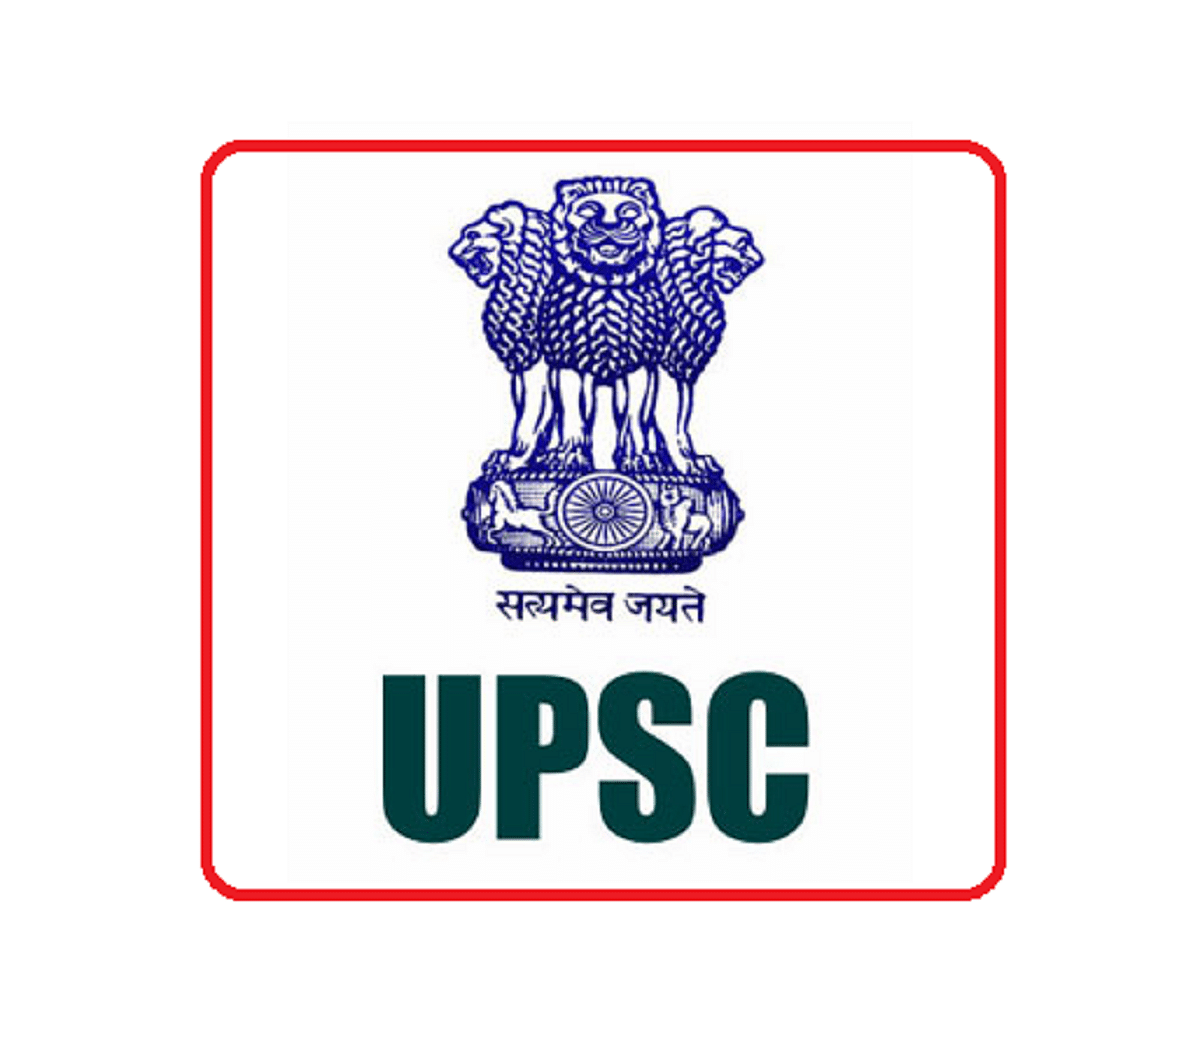 UPSC ISS Exam Notification 2021 for Graduates & Postgraduates, Exam to be held in July